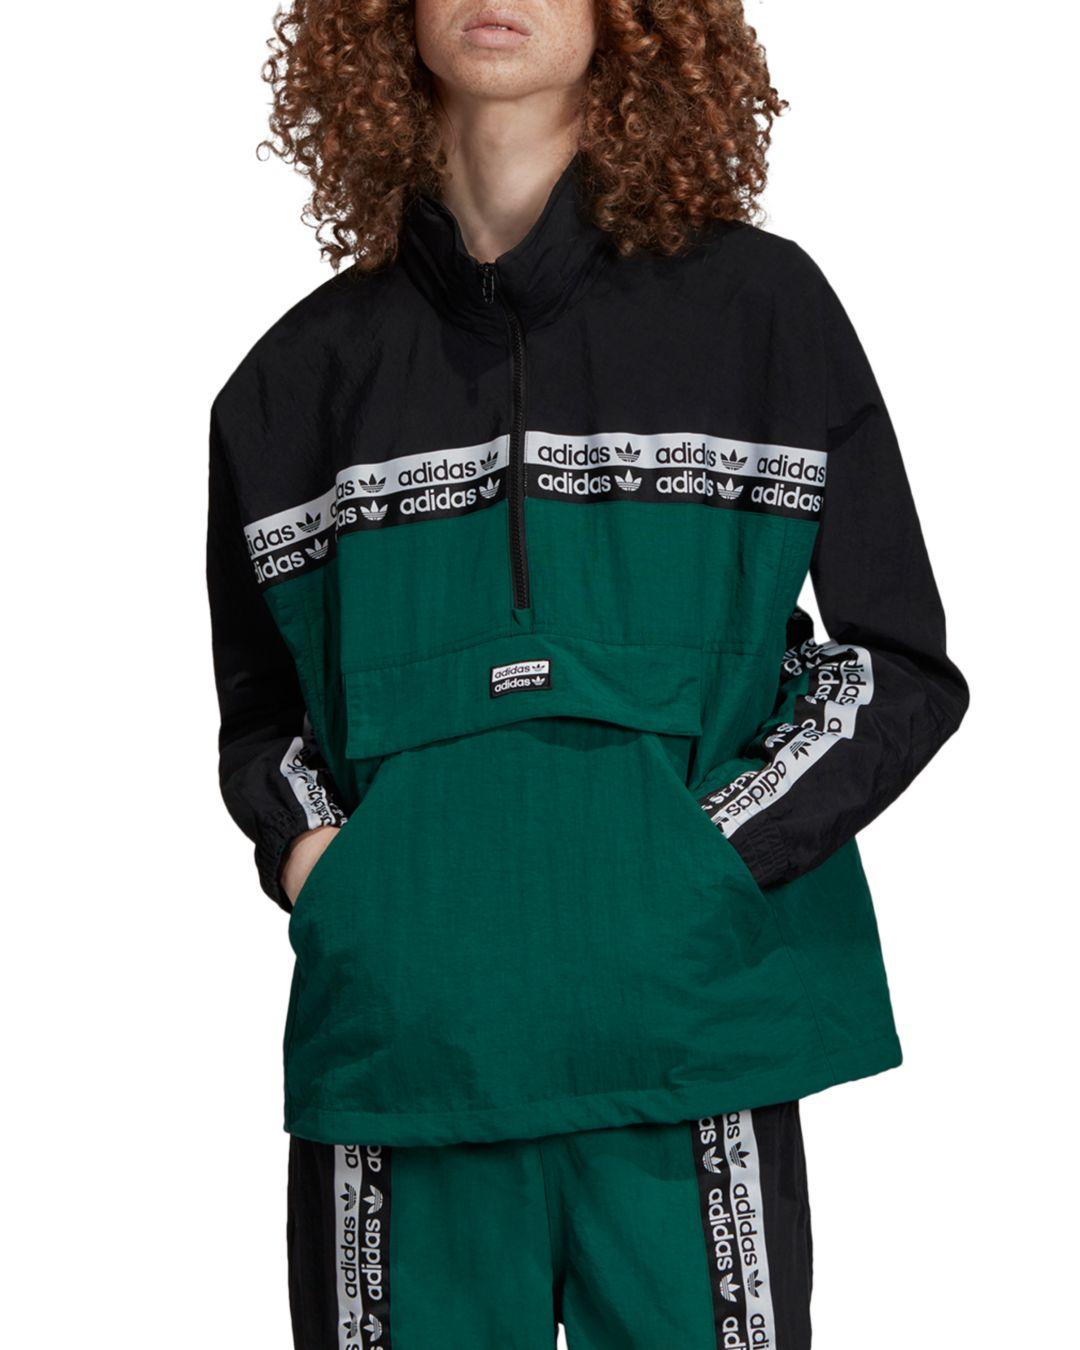 adidas Originals Synthetic Vocal Windbreaker Jacket in Dark Green (Green)  for Men - Lyst